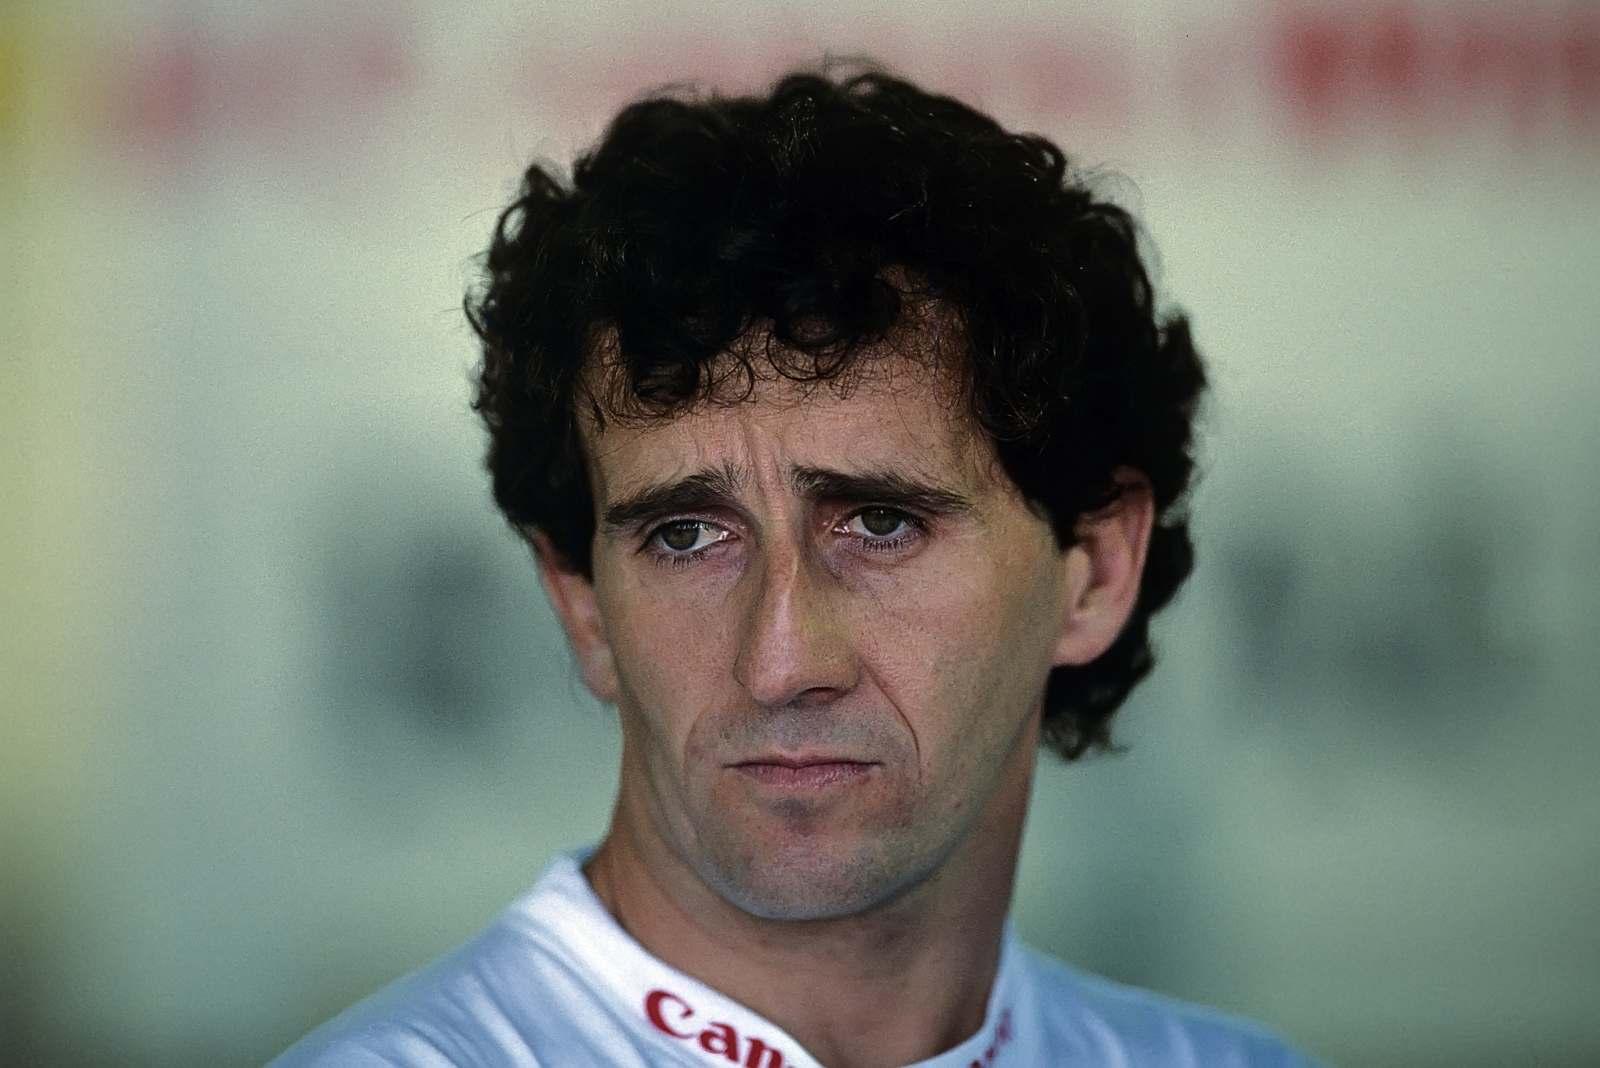 Alain Prost (FRA) - 4 Títulos (1985, 1986, 1989 e 1993)